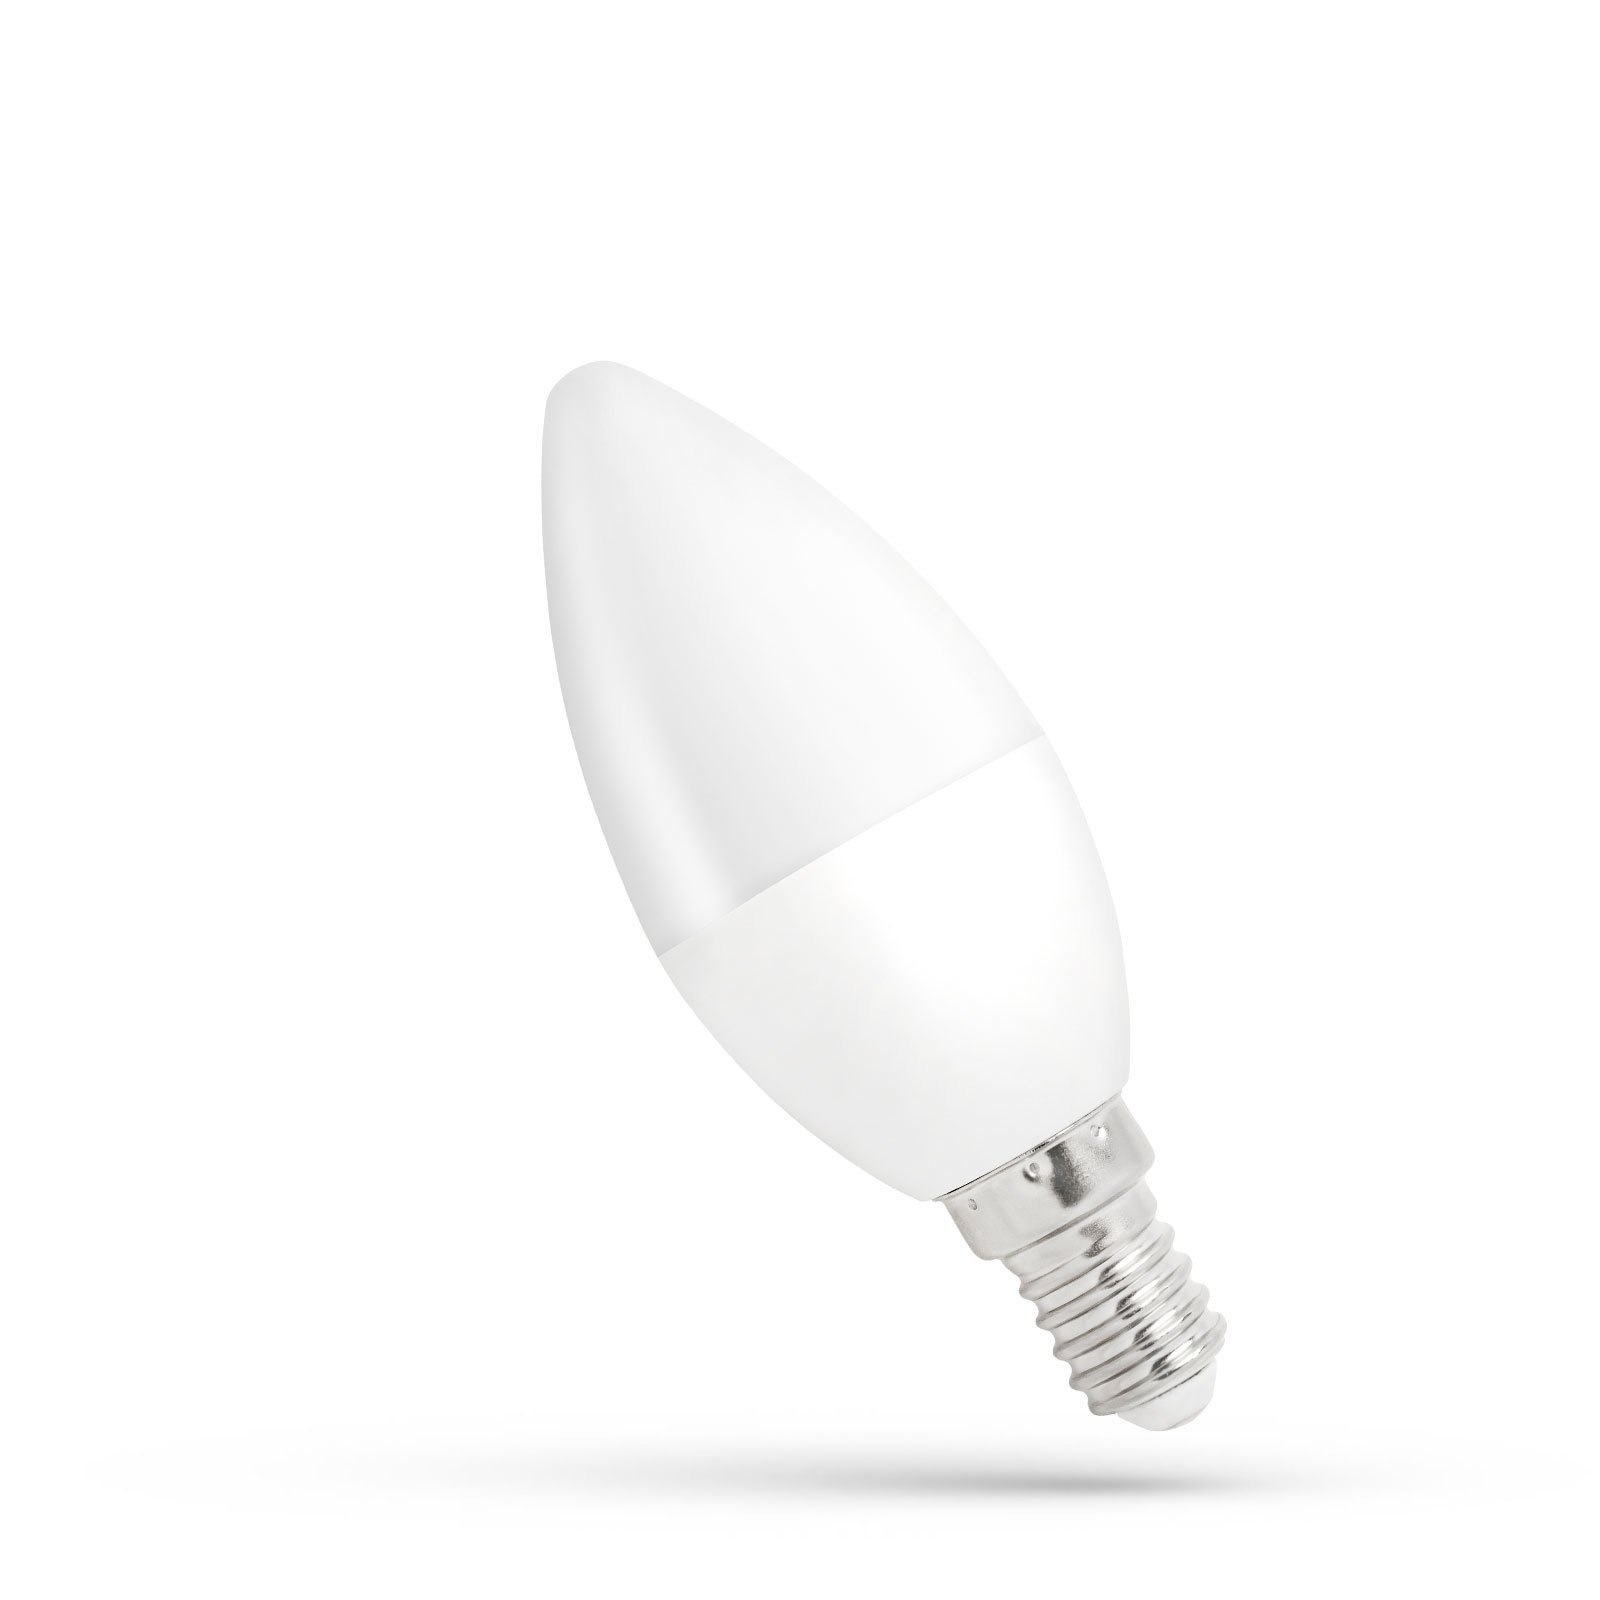 ernstig Tegenstander spanning LED kaarslamp - E14 fitting - 1W vervangt 10W - 3000K Warm wit licht -  Ledlichtdiscounter.nl